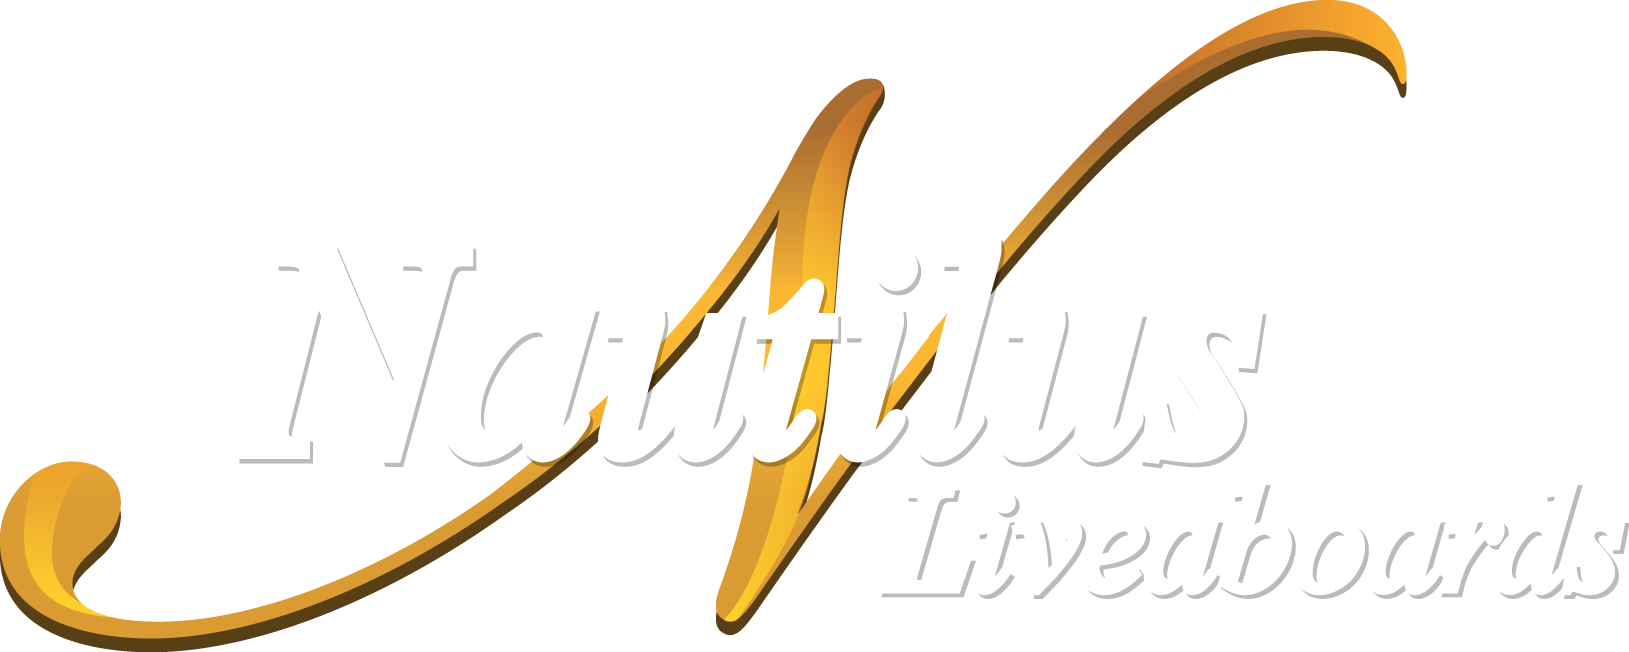 Nautilus liveaboards logo white